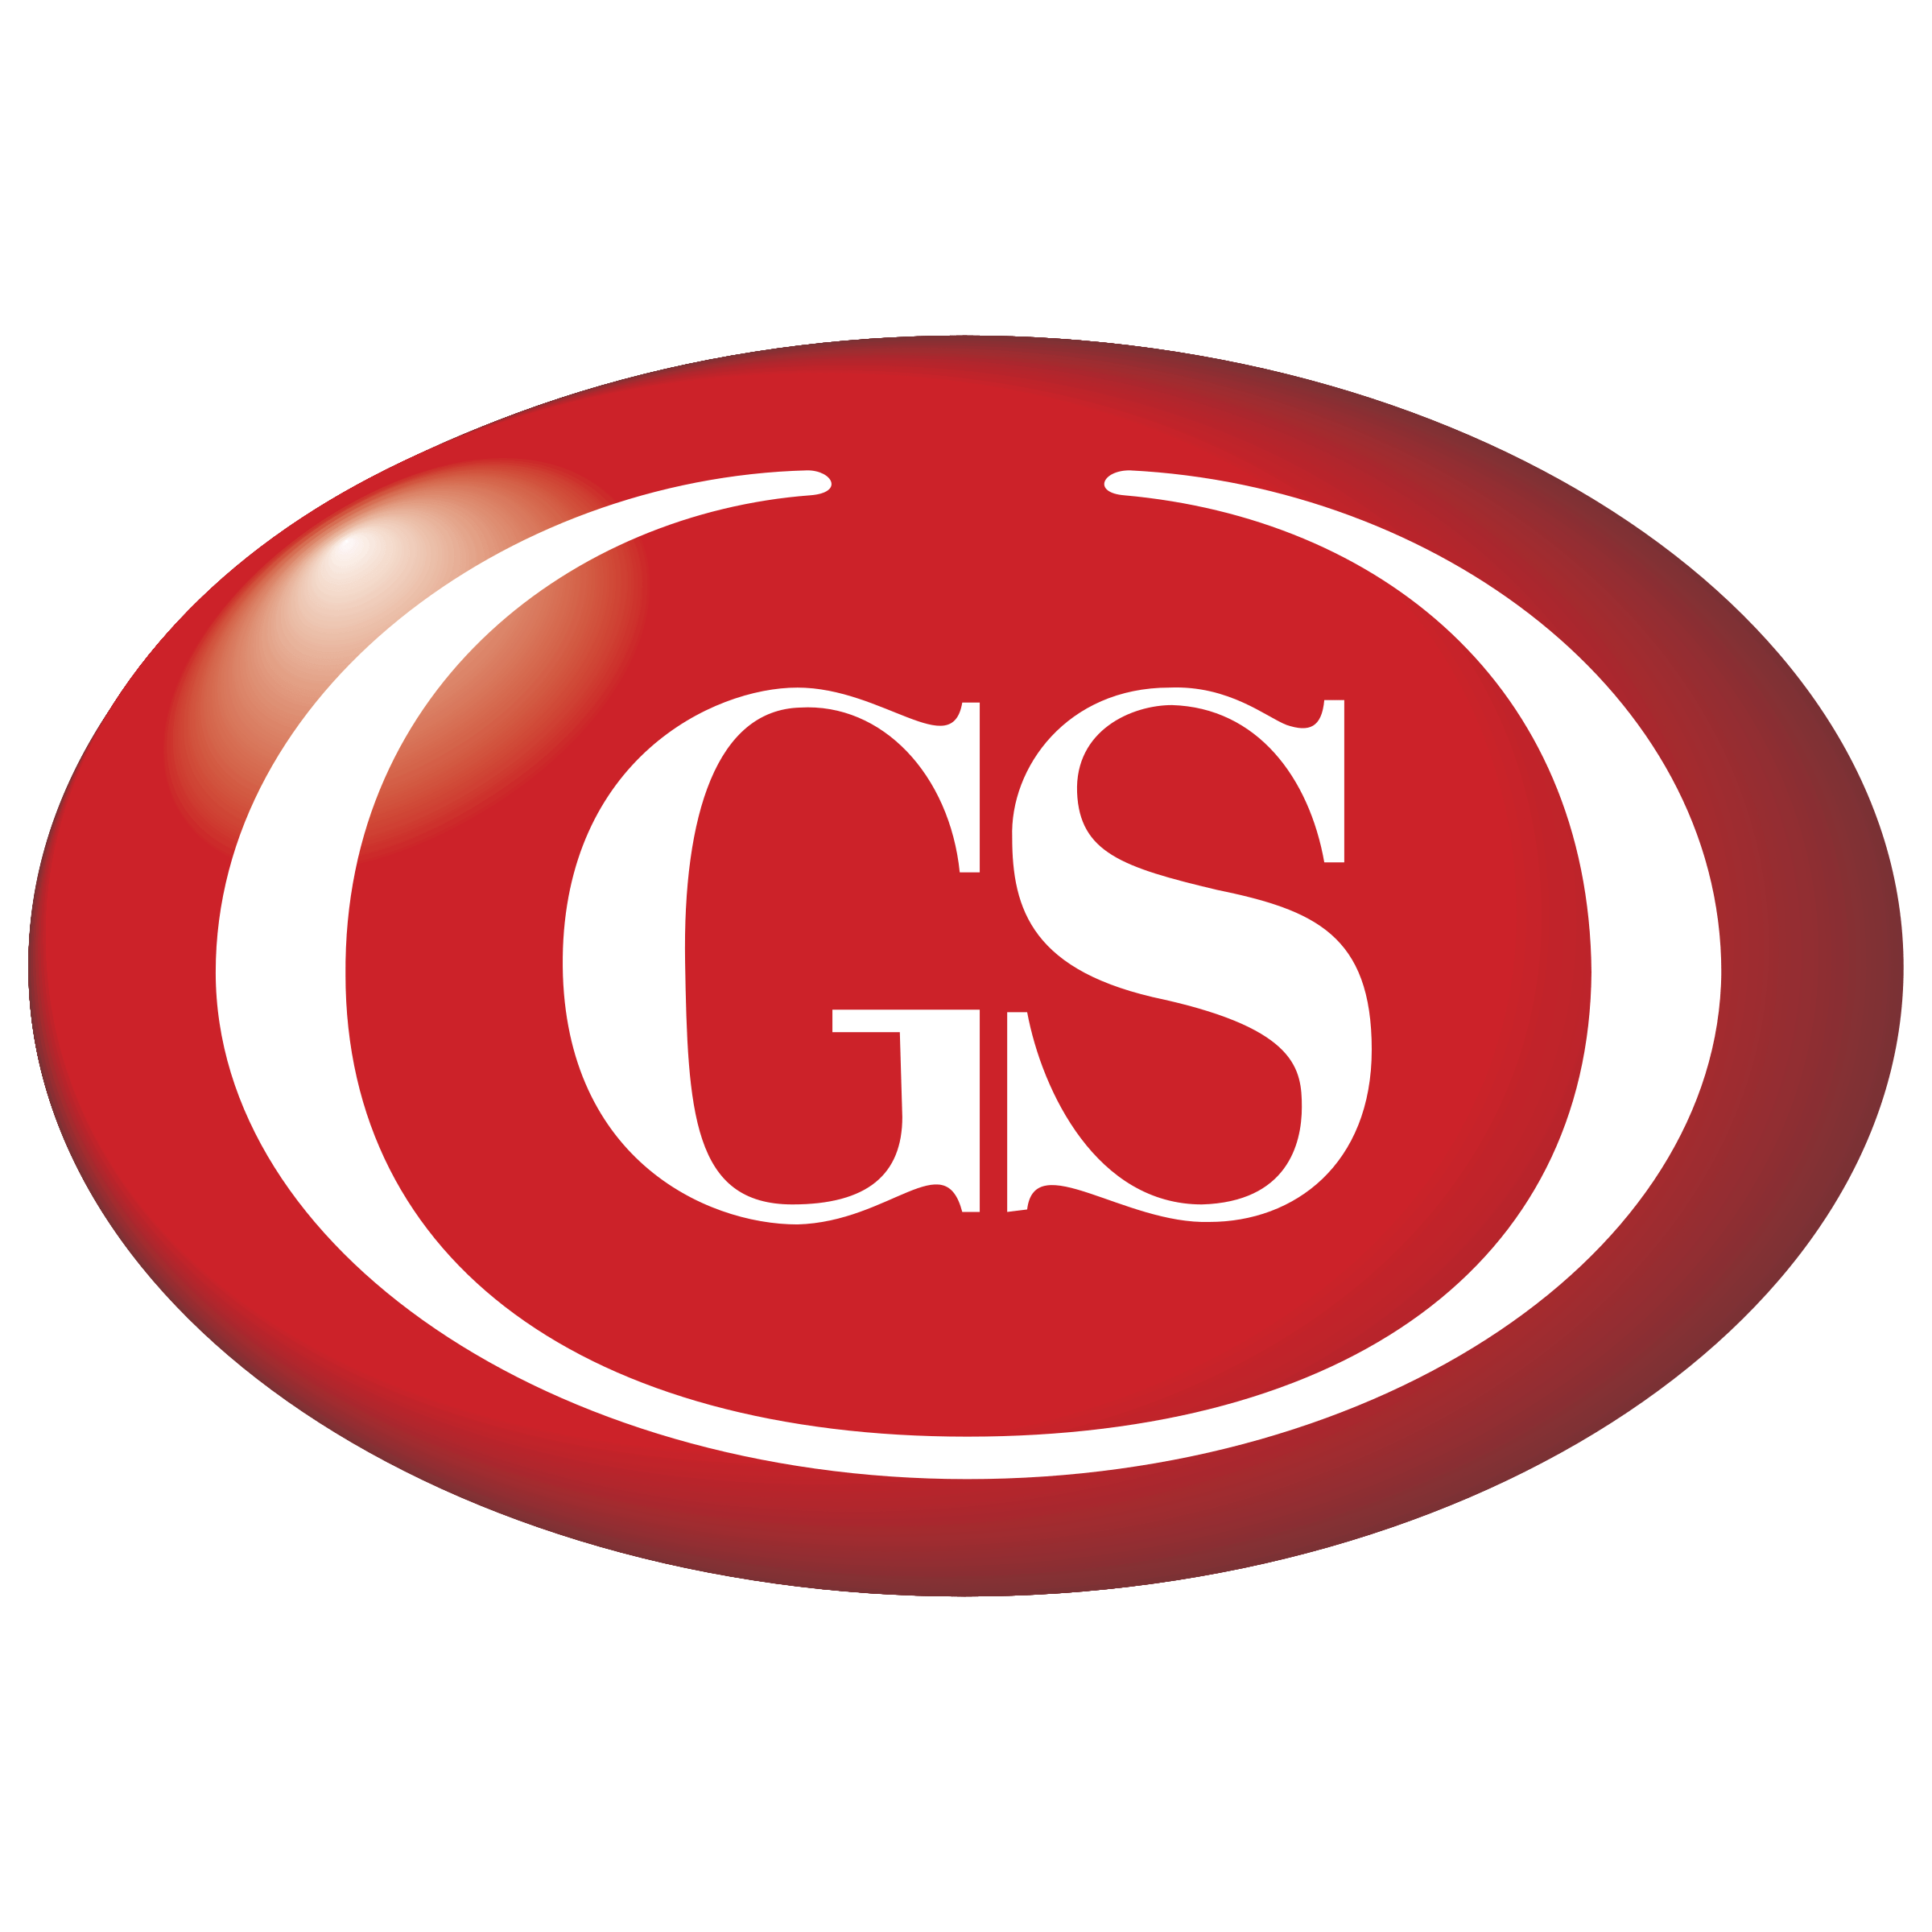 GS Logo - GS Logo PNG Transparent & SVG Vector